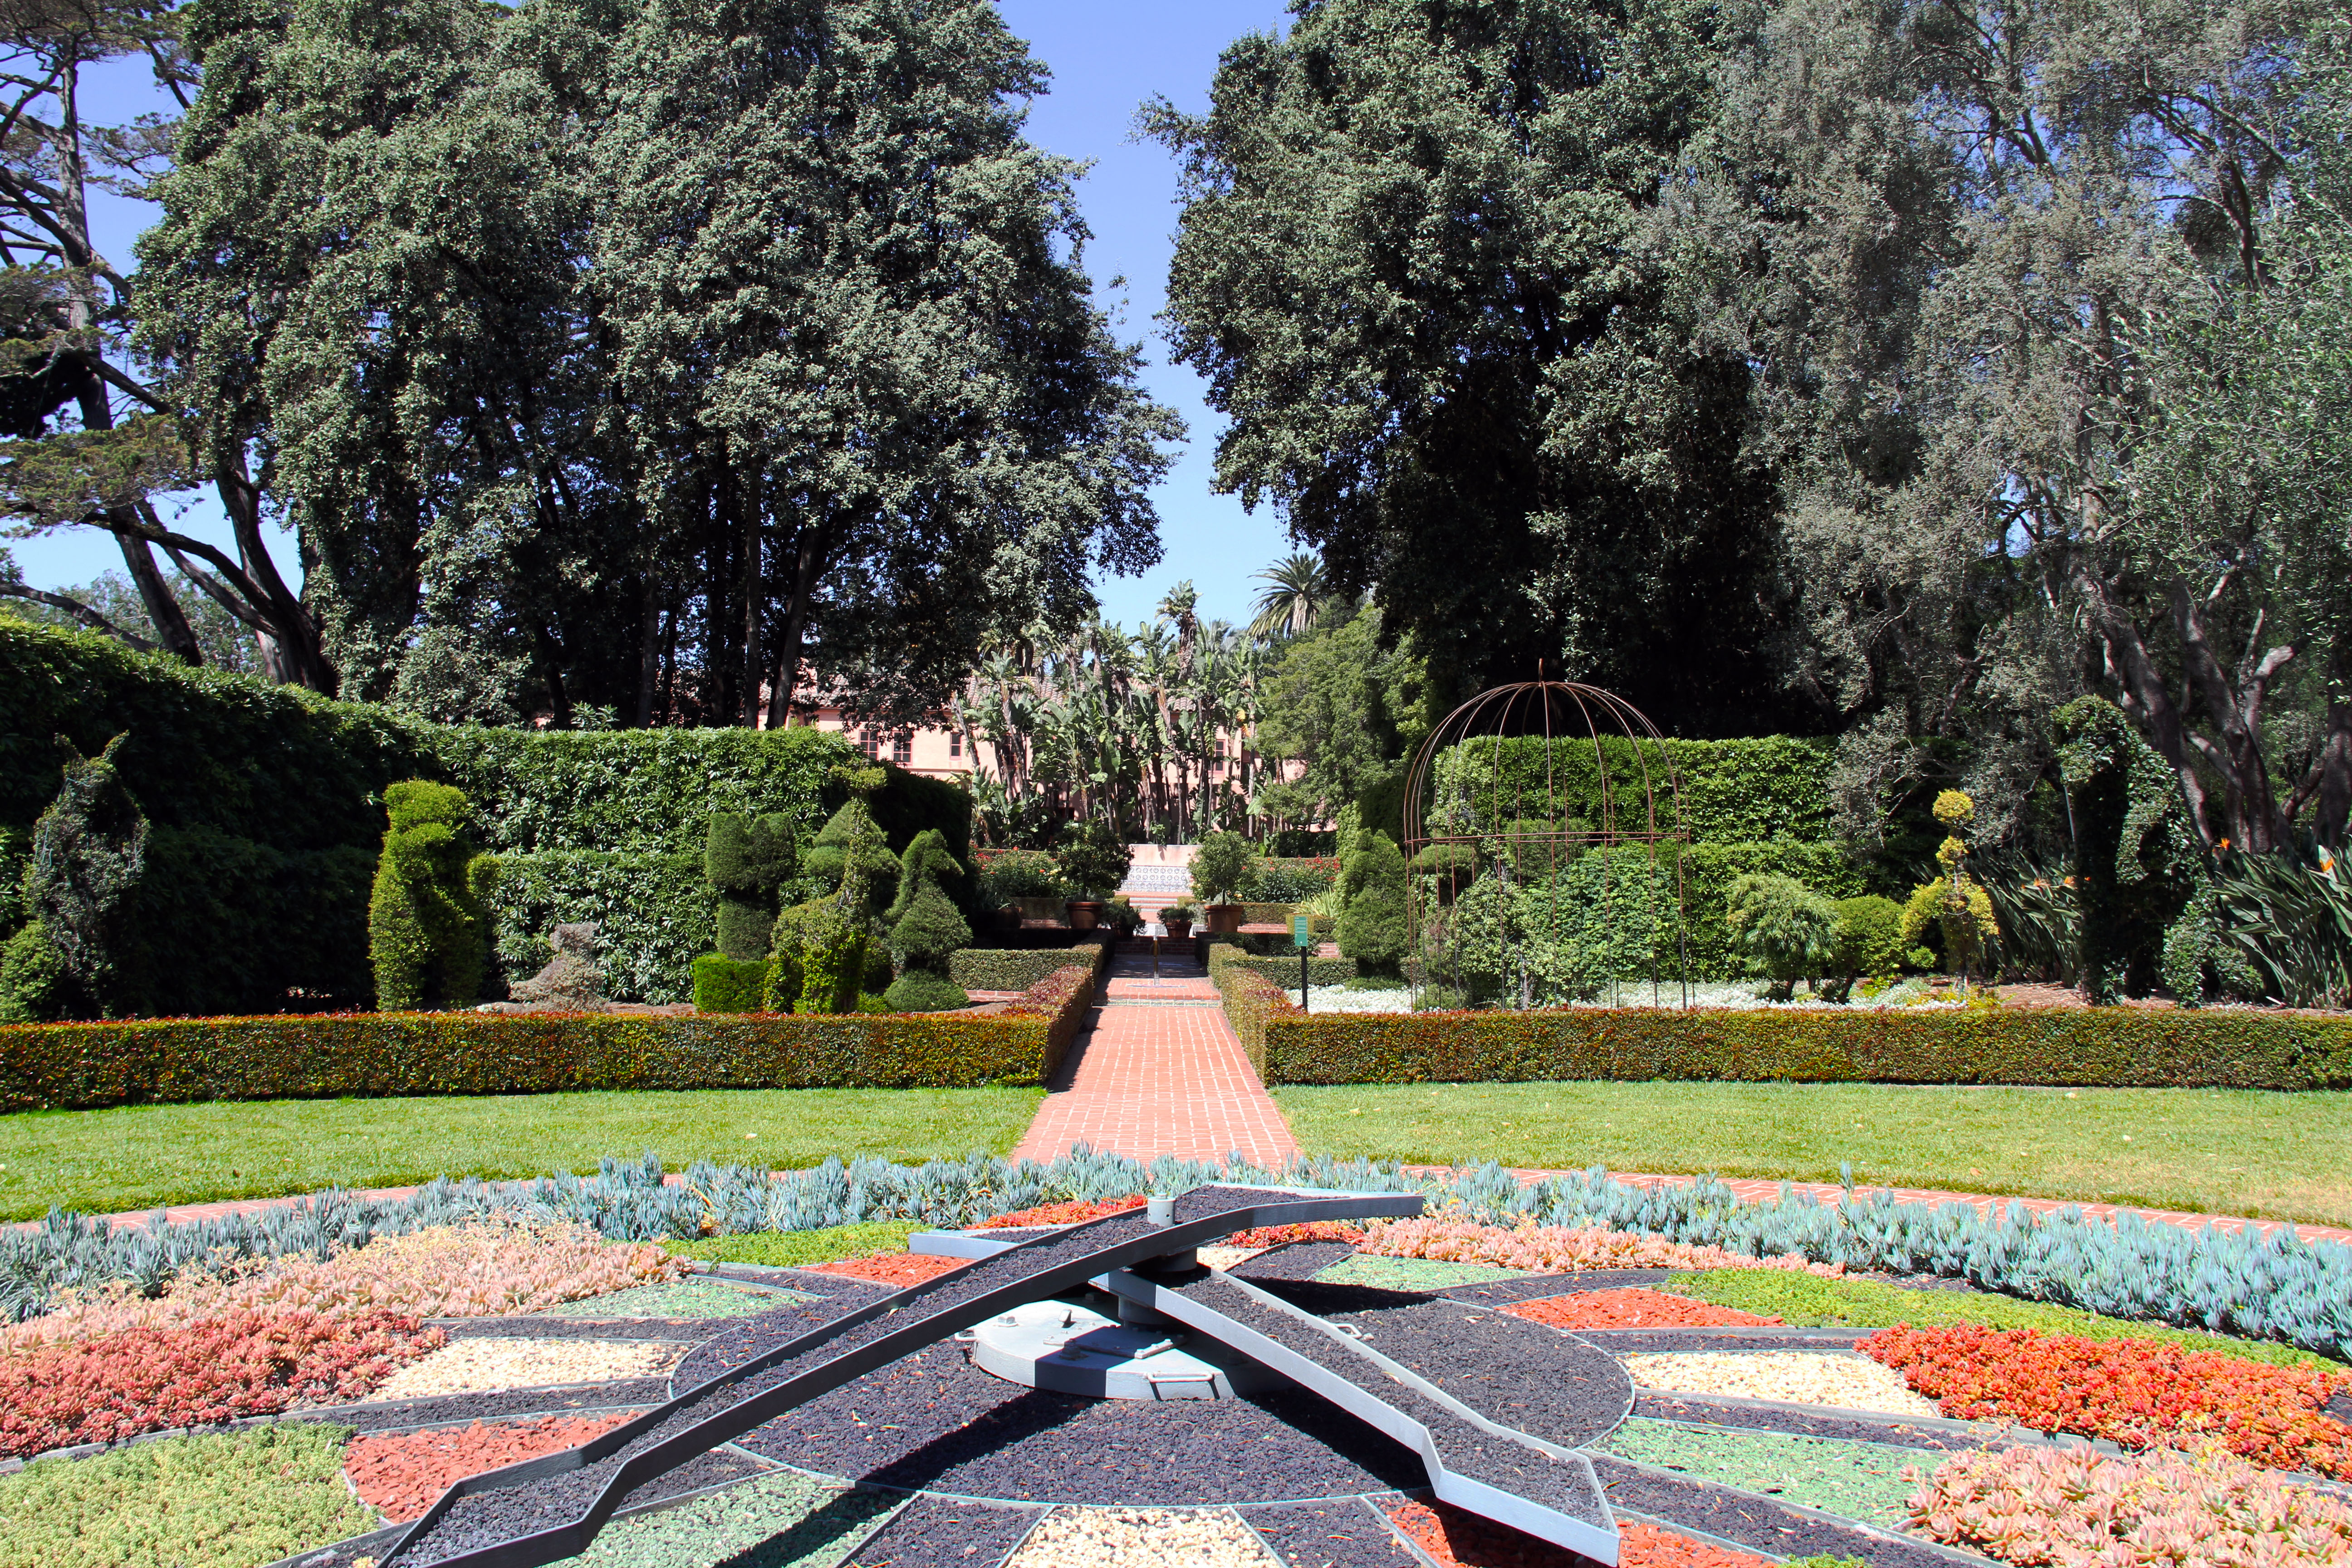 Touring Lotusland, Santa Barbara's Secret Garden